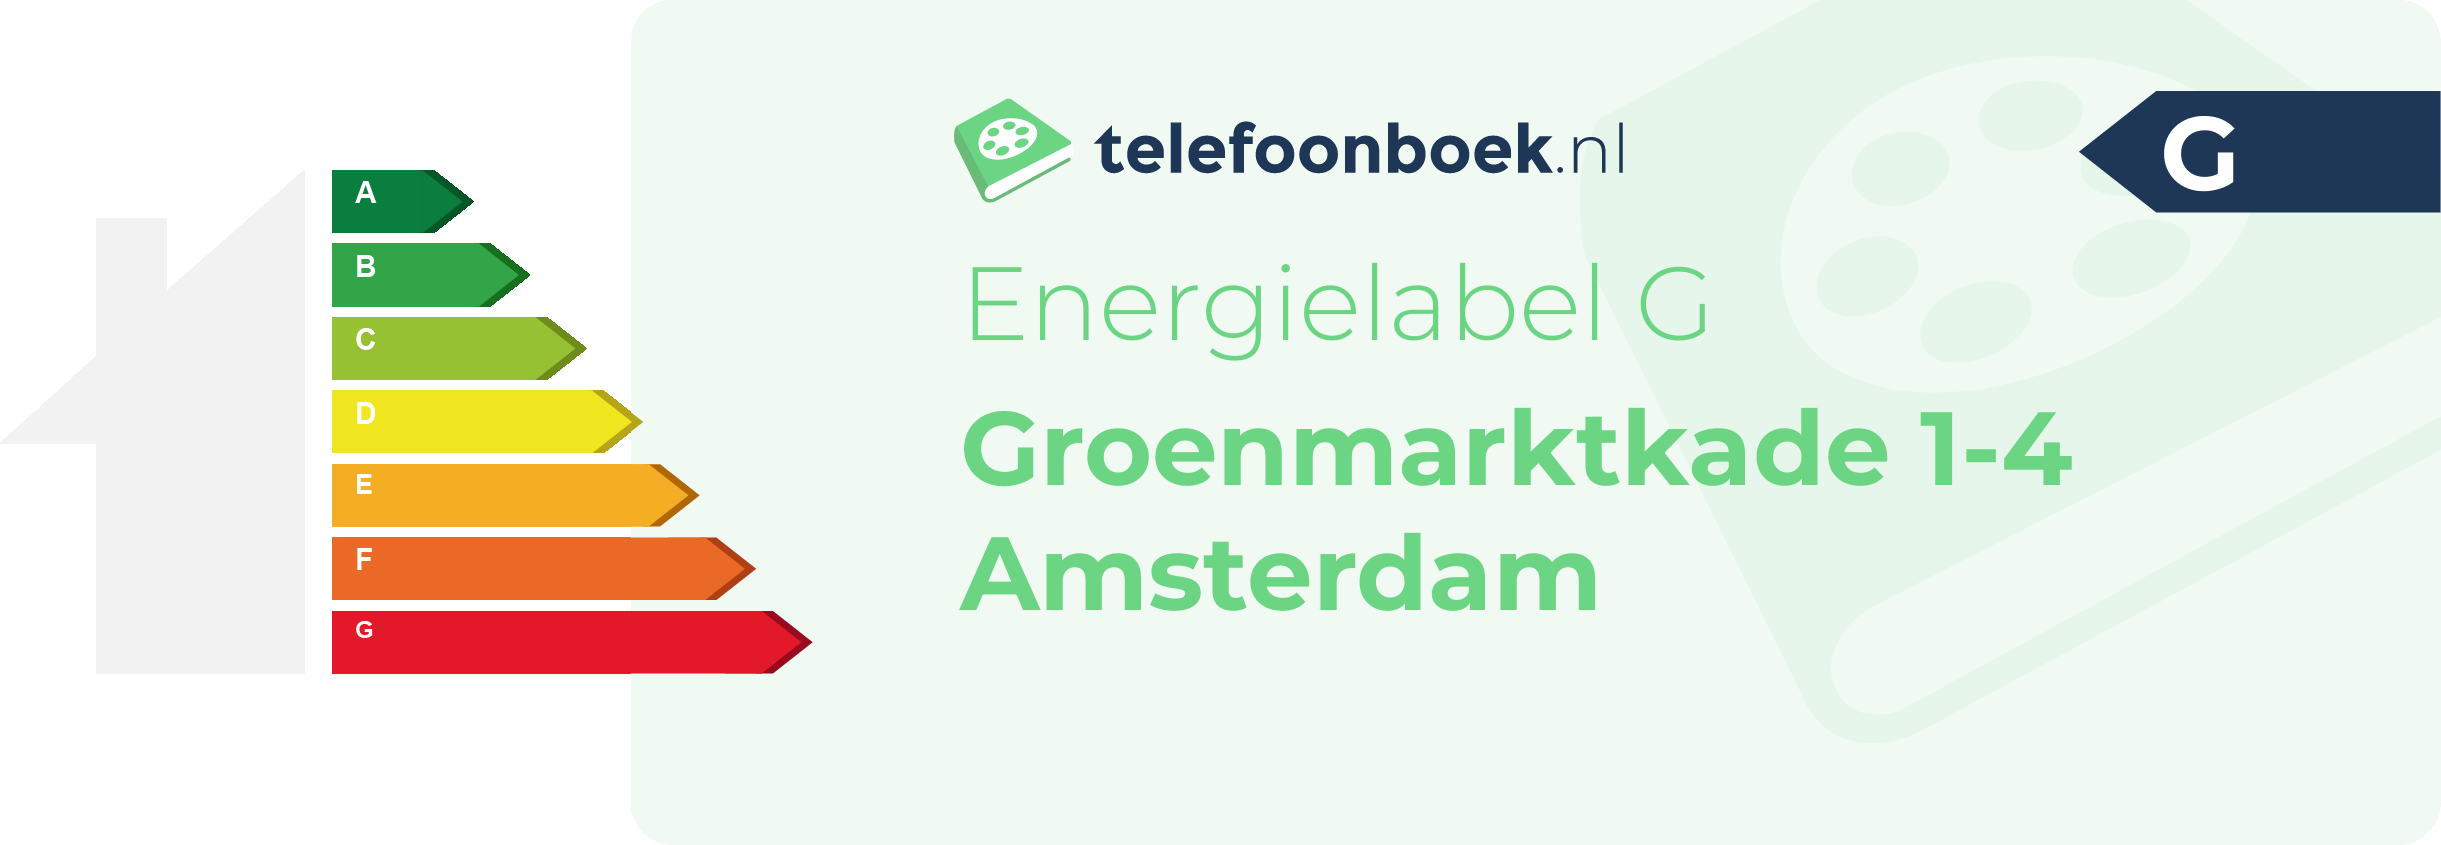 Energielabel Groenmarktkade 1-4 Amsterdam